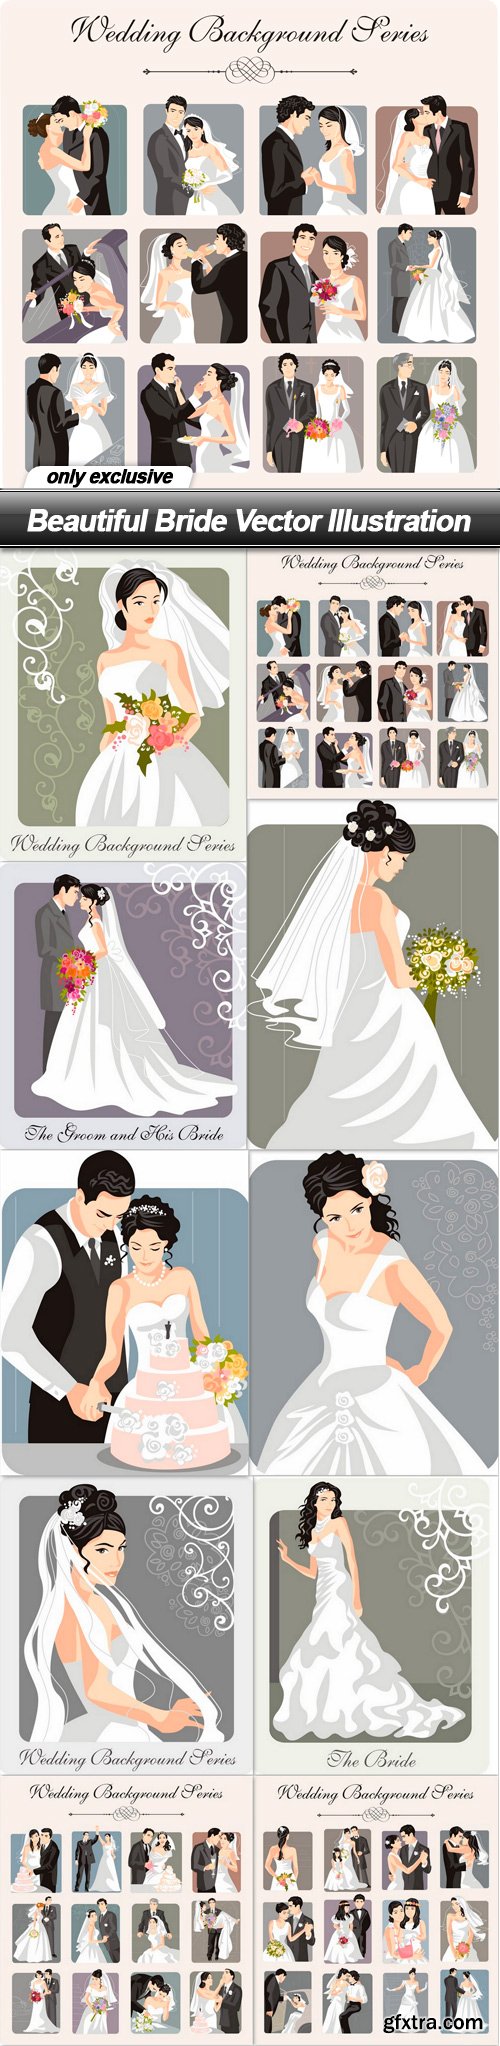 Beautiful Bride Vector Illustration - 10 EPS